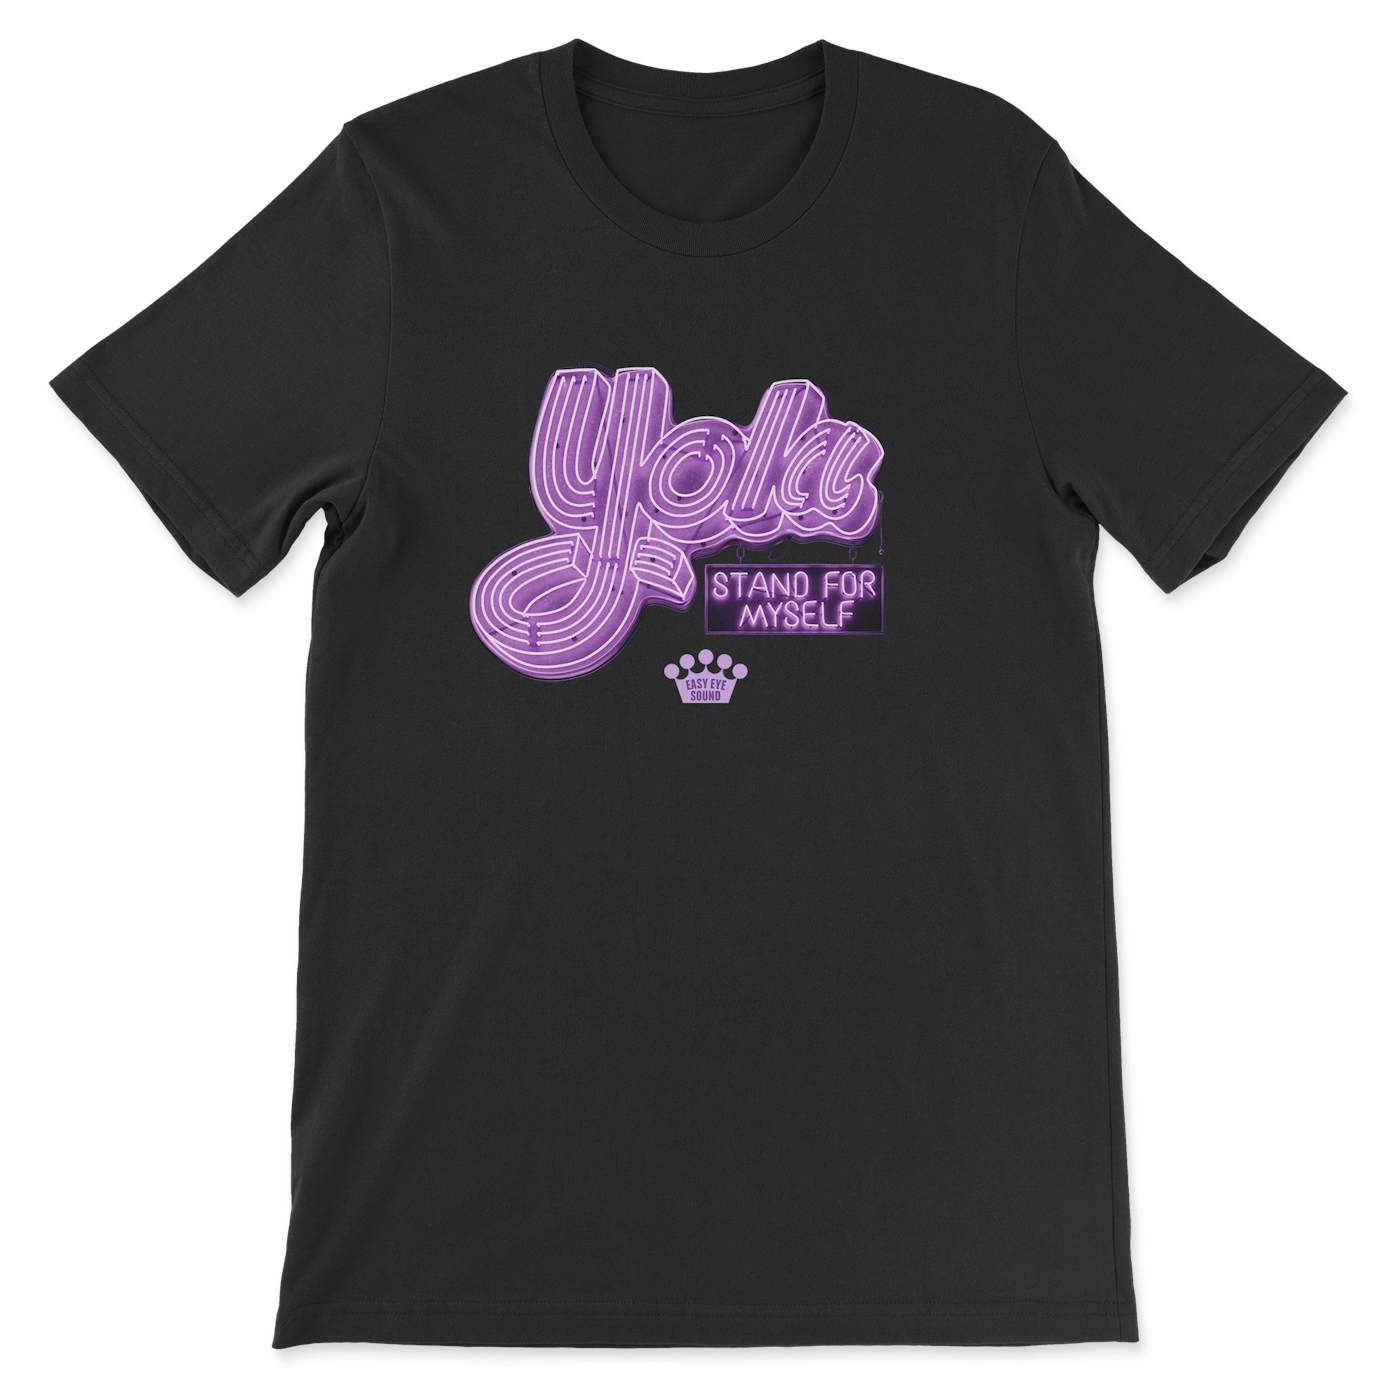 Yola - Stand For Myself [T-Shirt]